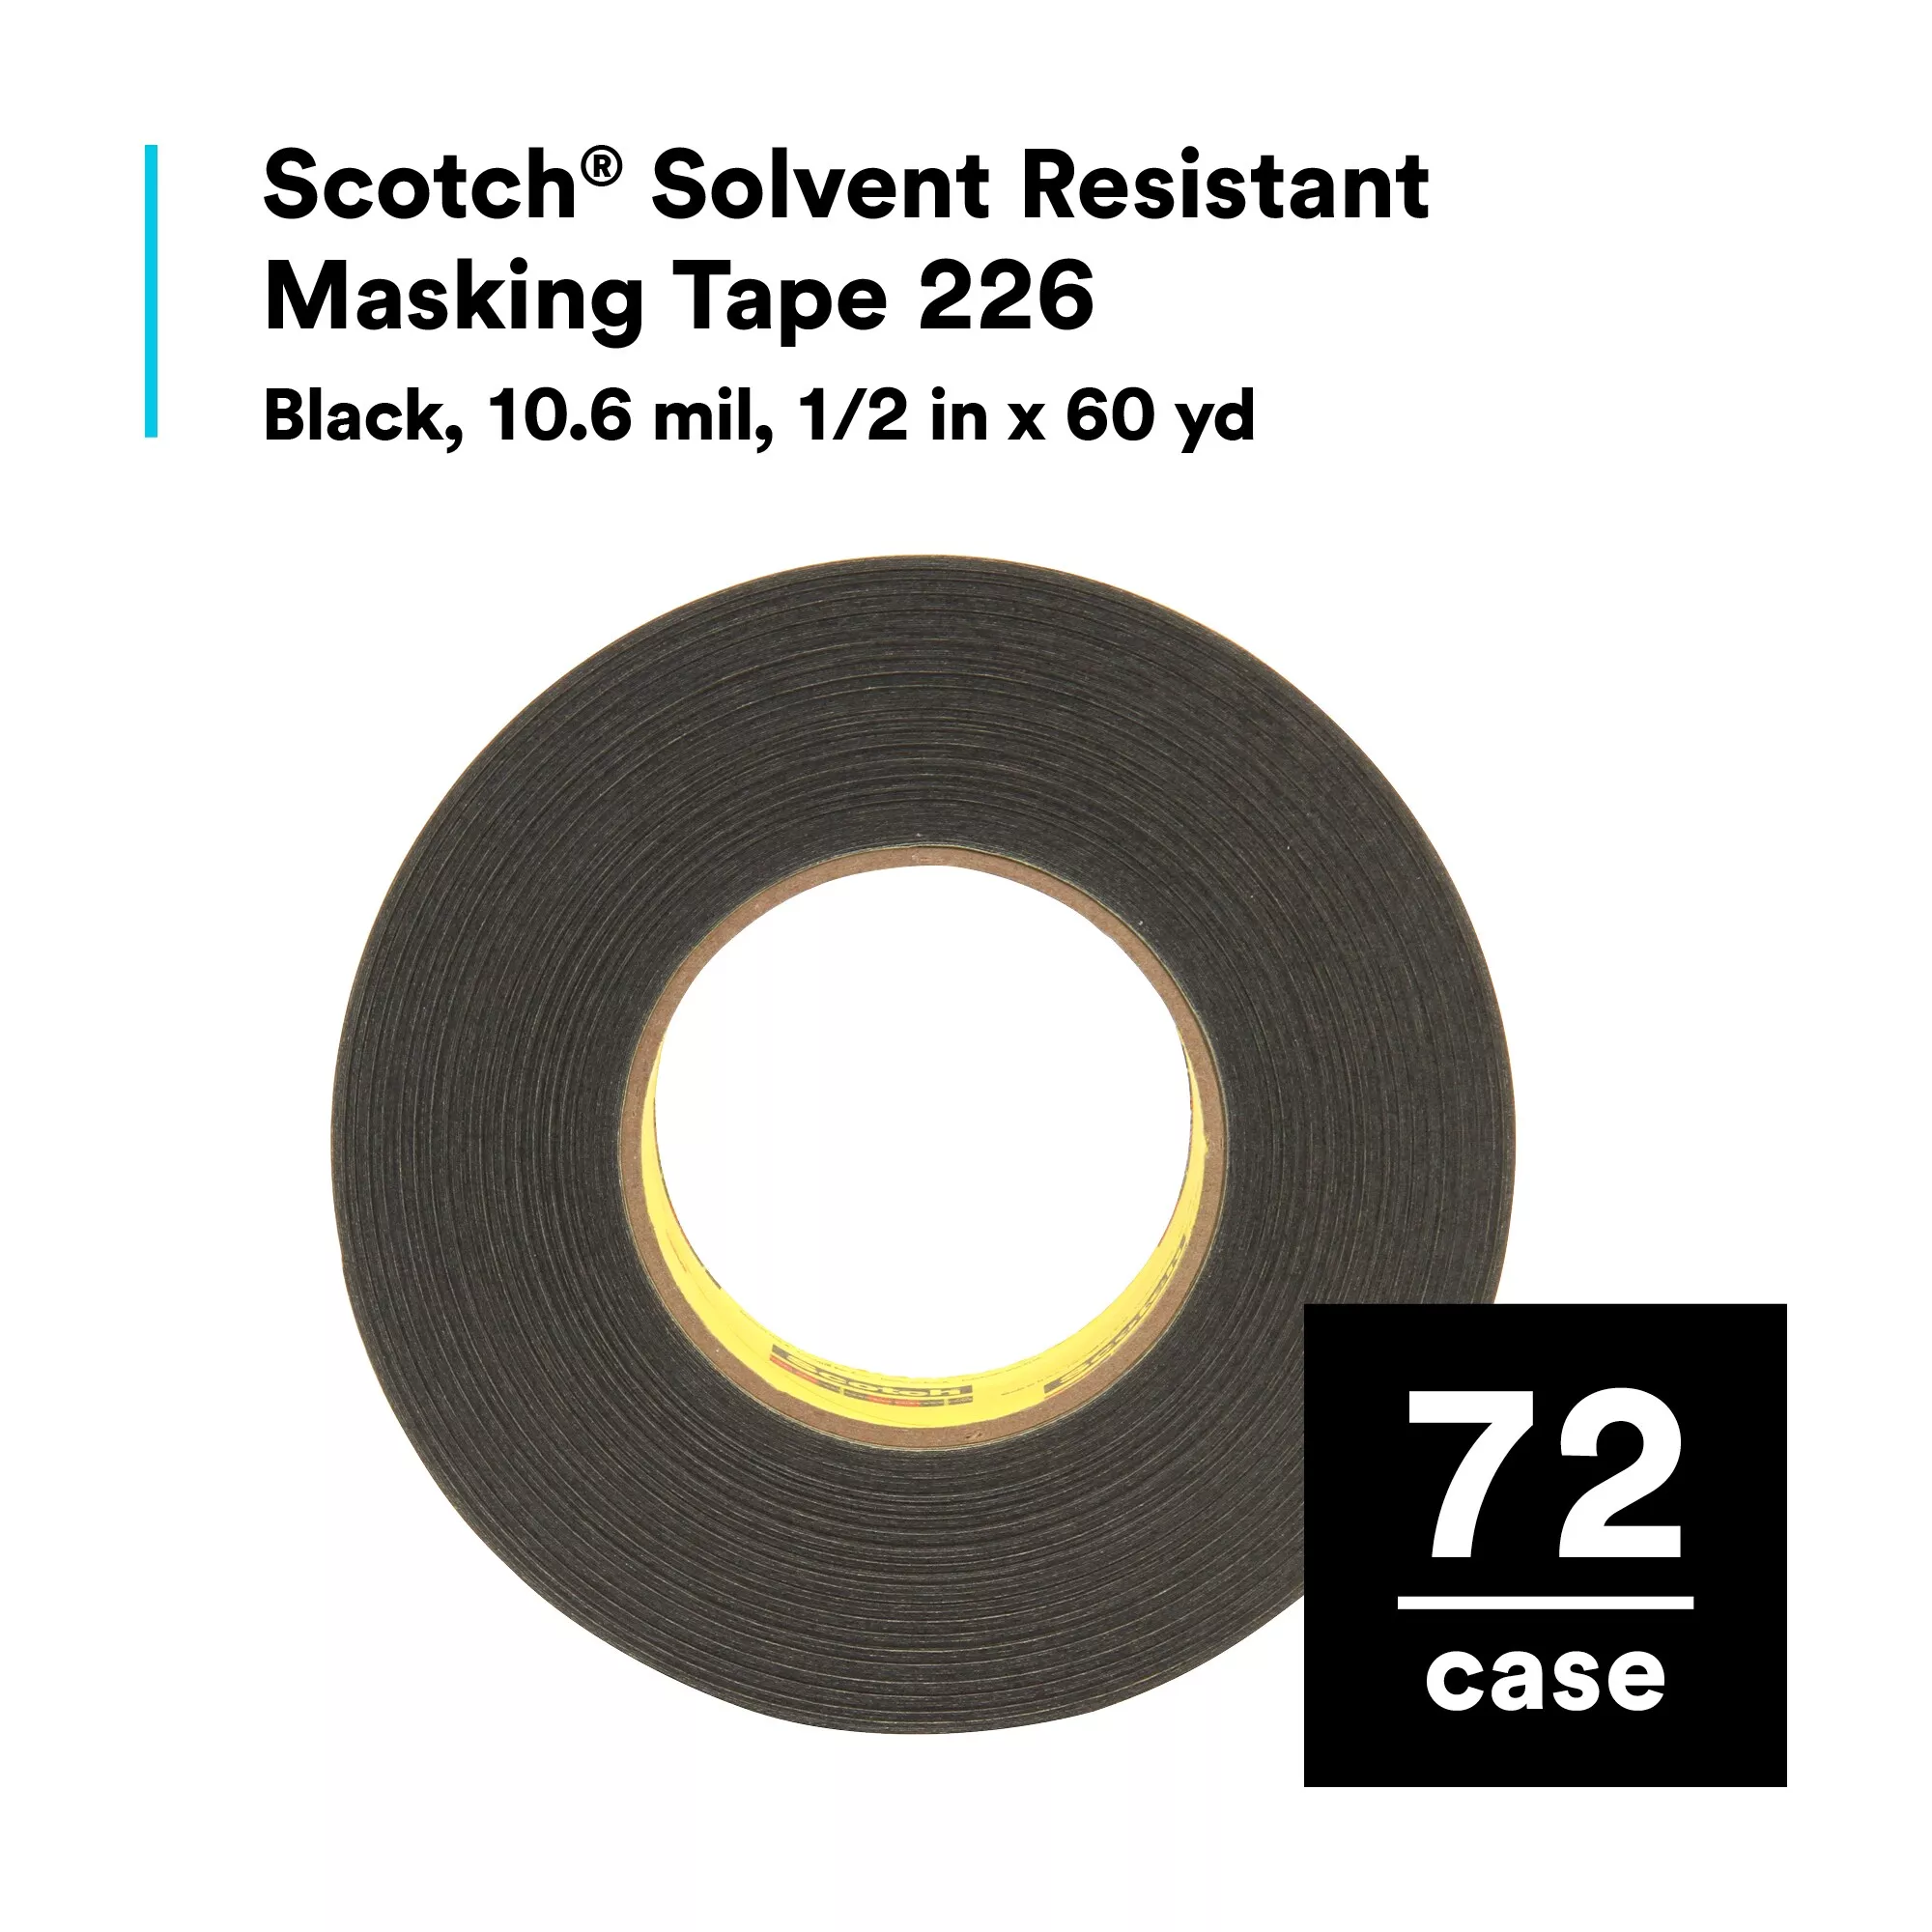 SKU 7010373496 | Scotch® Solvent Resistant Masking Tape 226